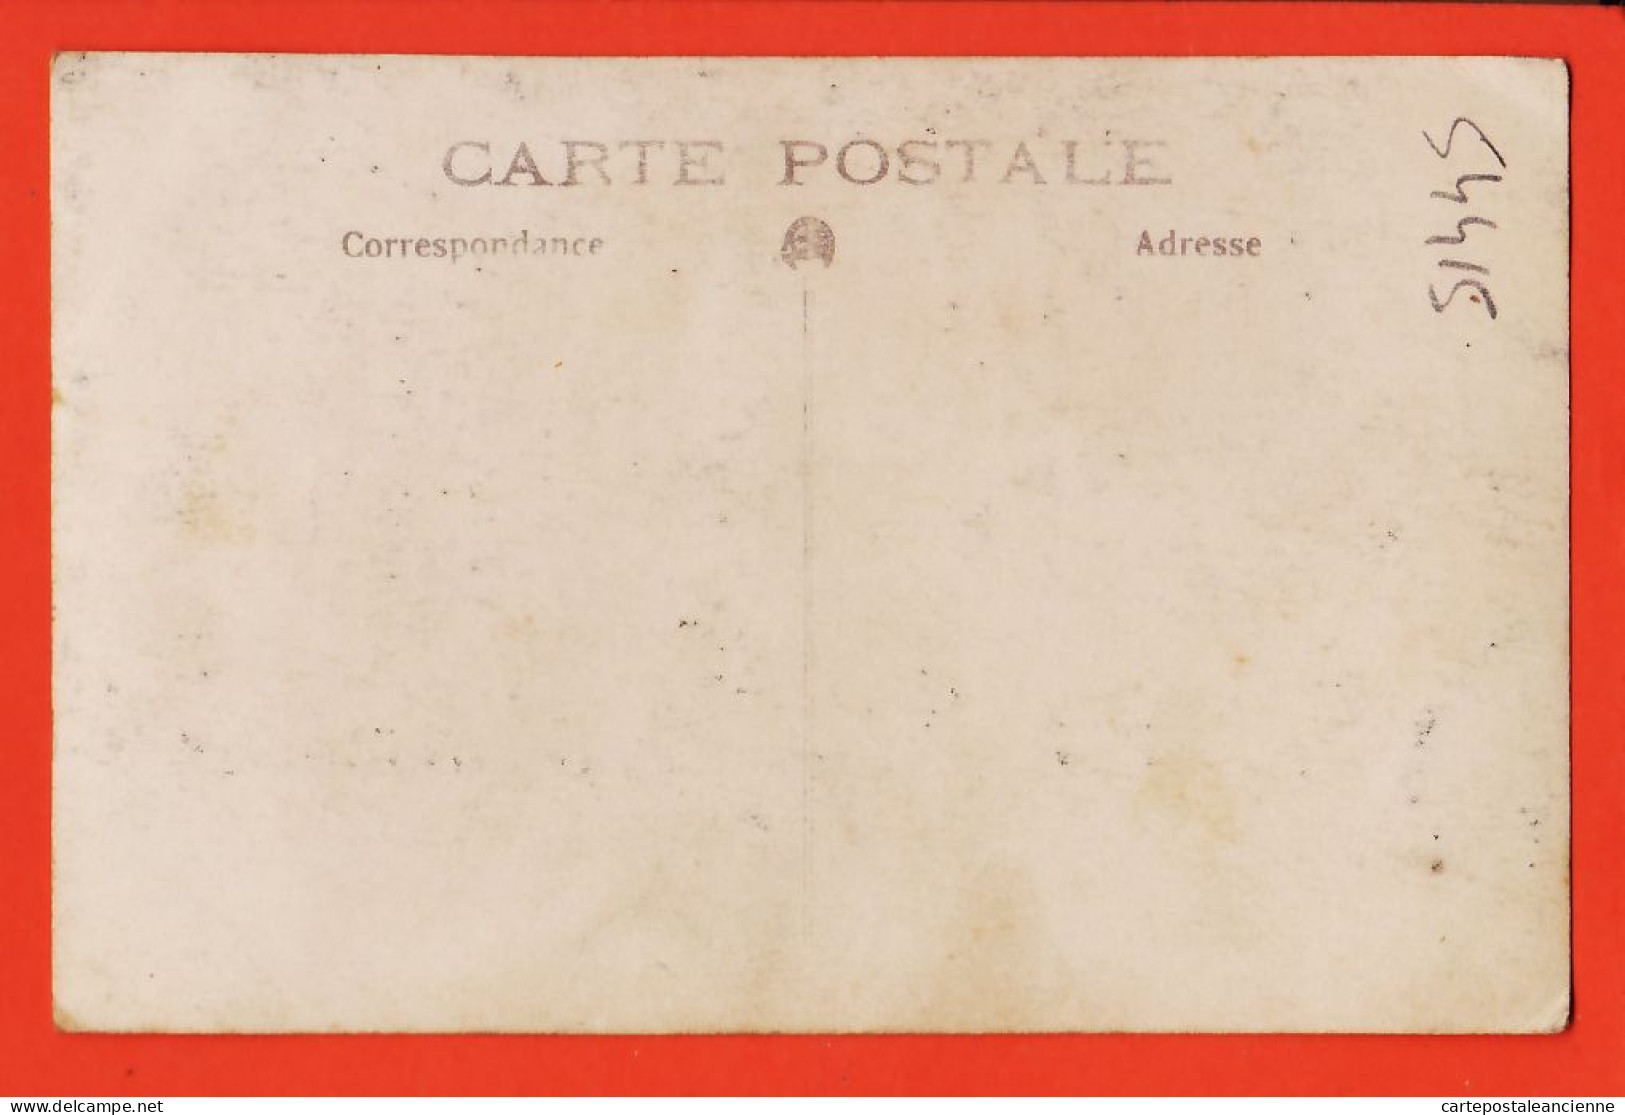 05504 ● Carte-Photo 1920s Jeune Femme Famille MAFFRE Et/ou BARTHE De CRUZY 34-Hérault - Photographs